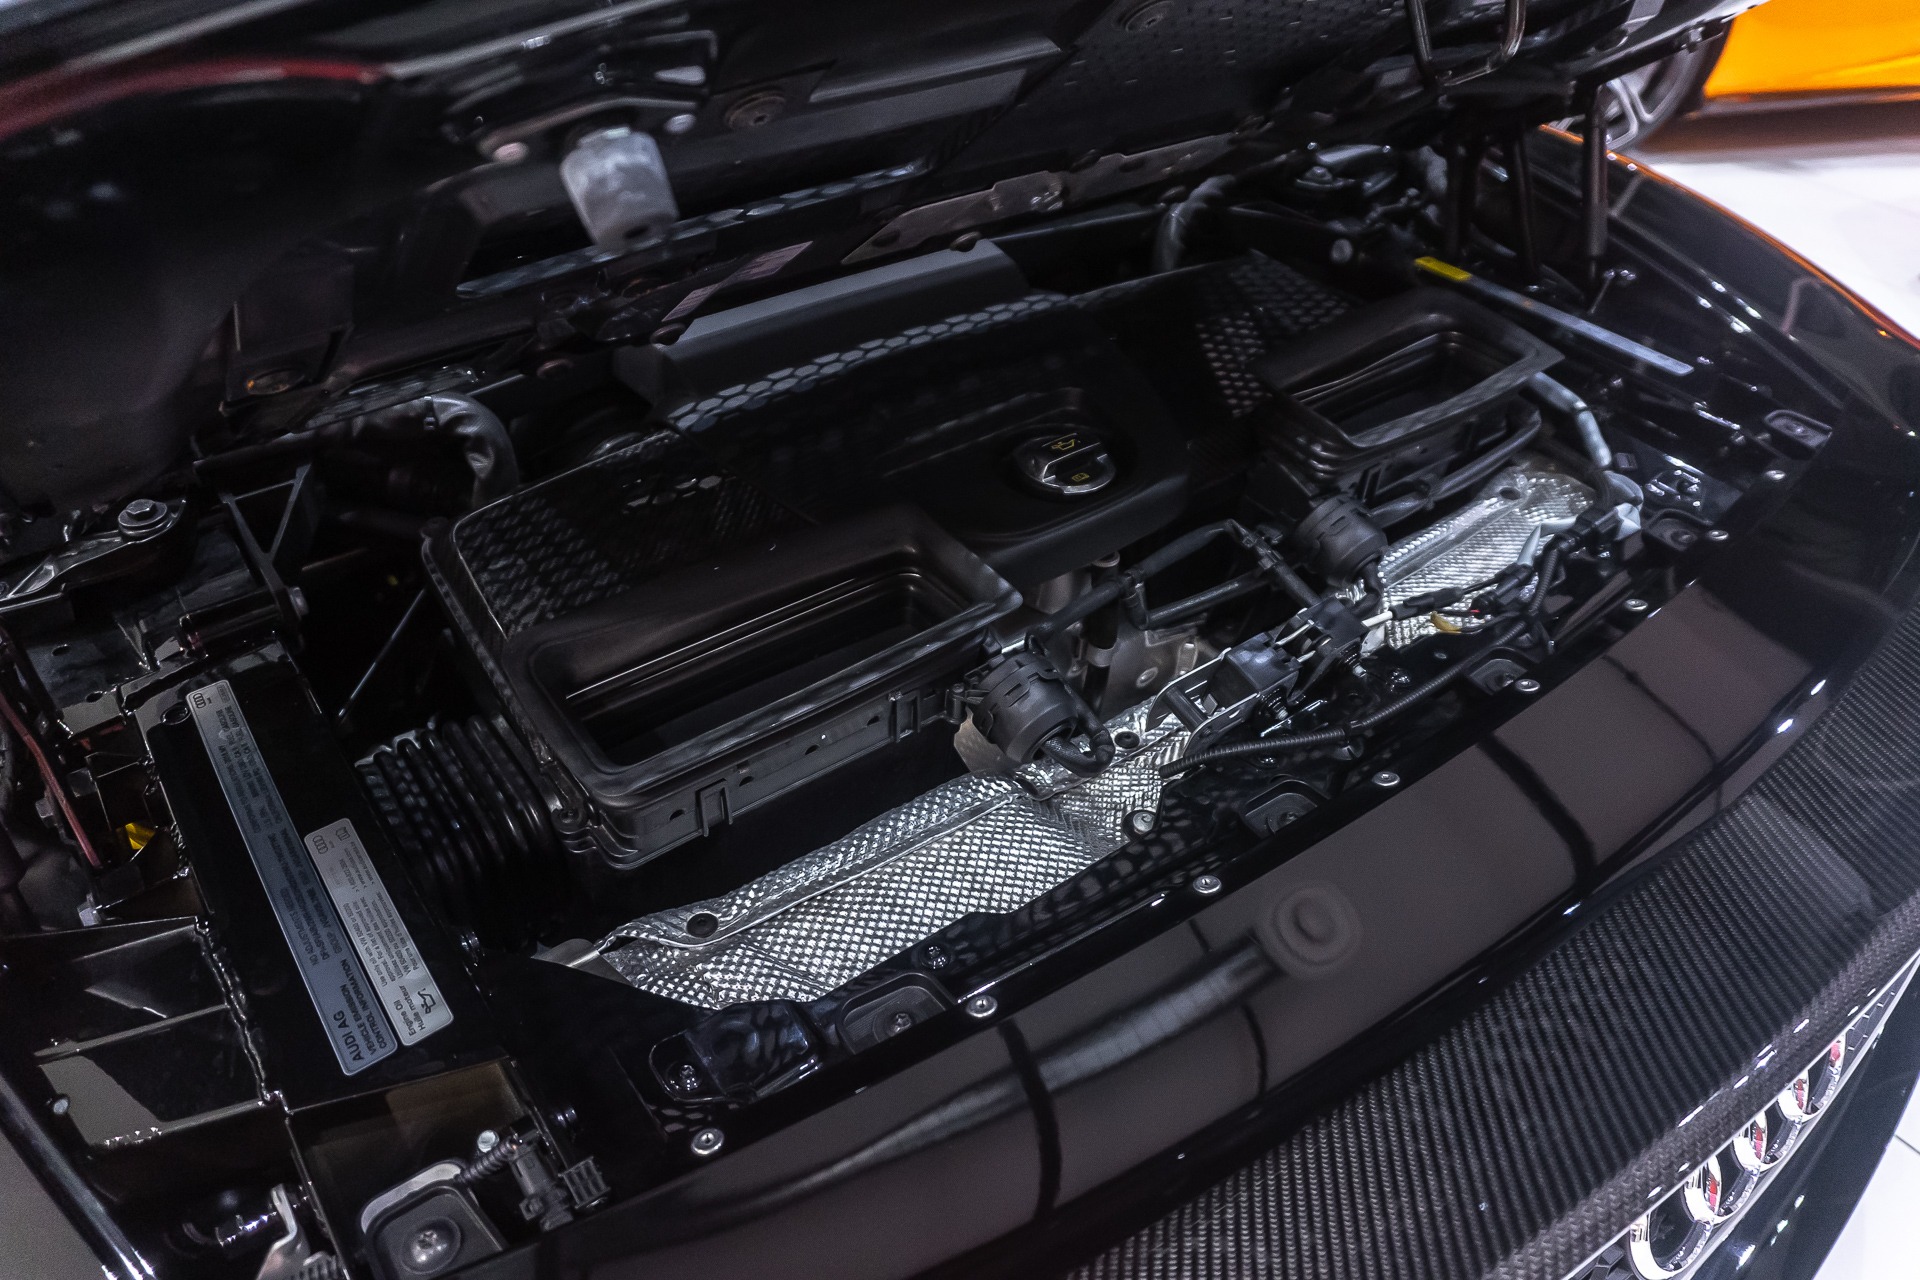 Used-2018-Audi-R8-Spyder-V10-plus-Convertible-MSRP-22039025k-in-Upgrades